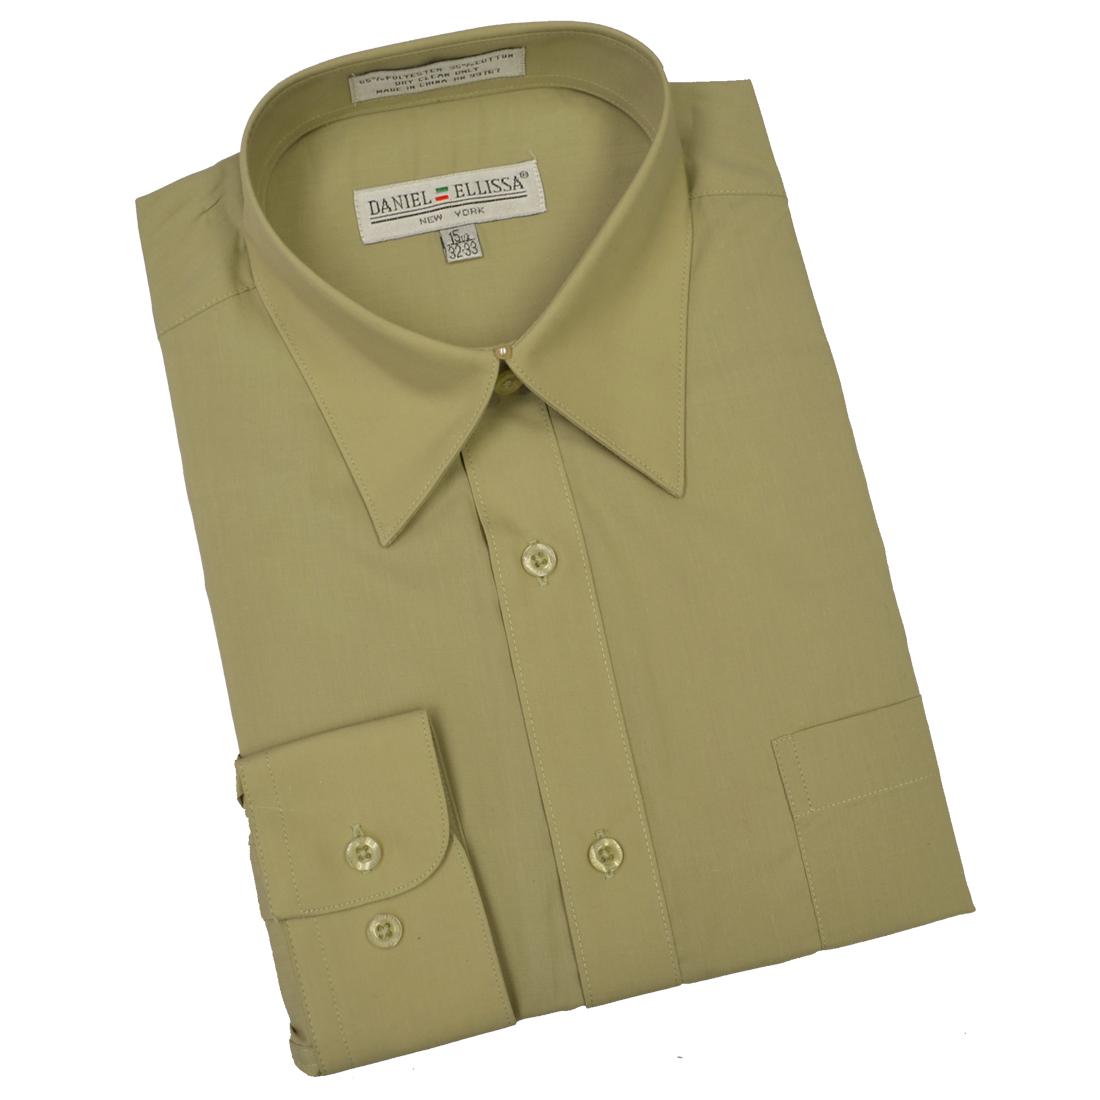 Daniel Ellissa Solid Olive Cotton Blend Dress Shirt With Convertible ...